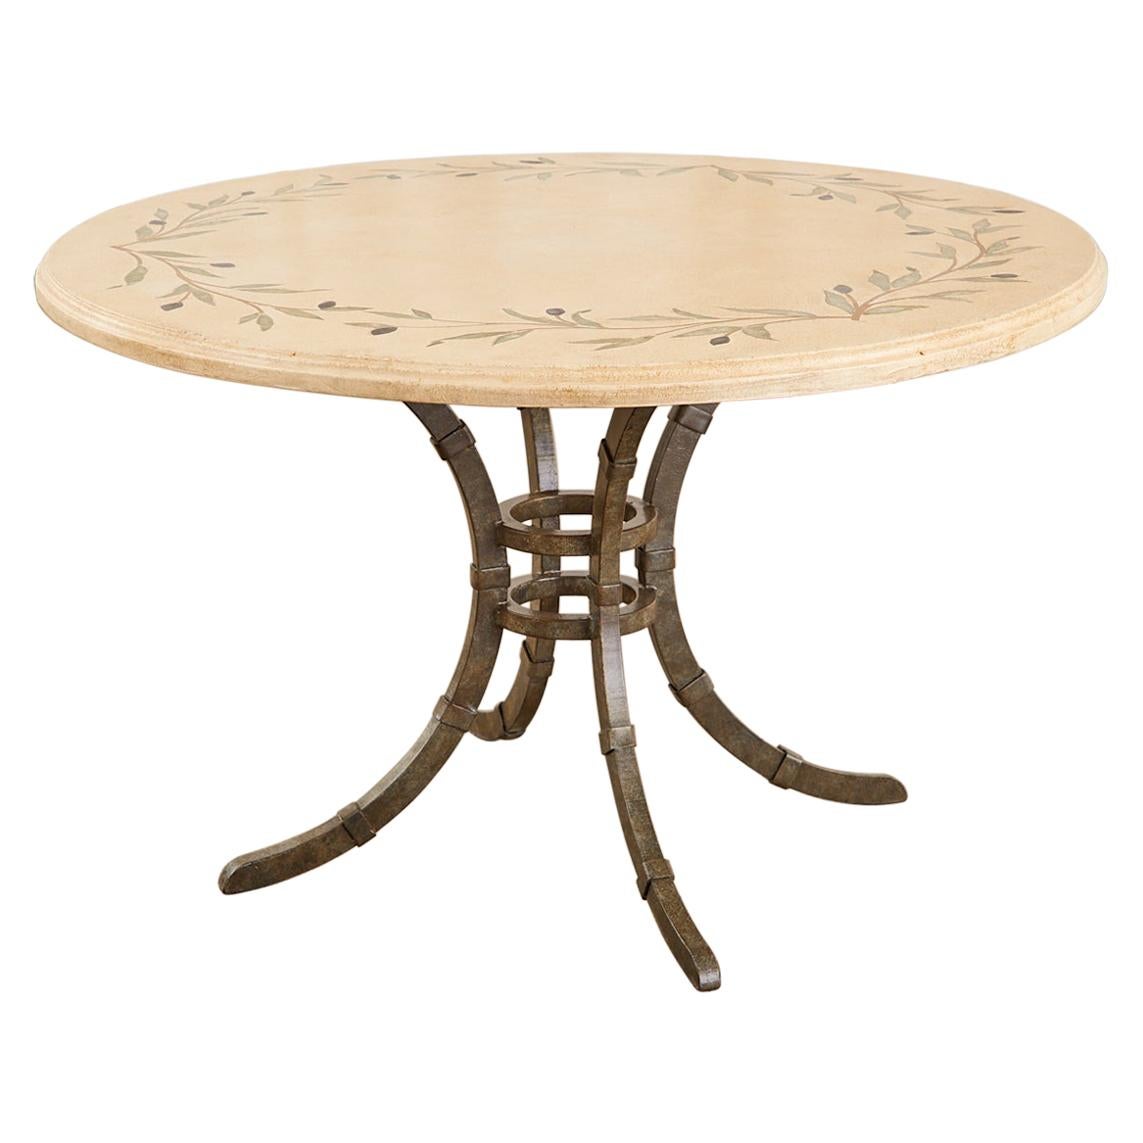 Italian Glazed Pottery Top Iron Pedestal Dining Table